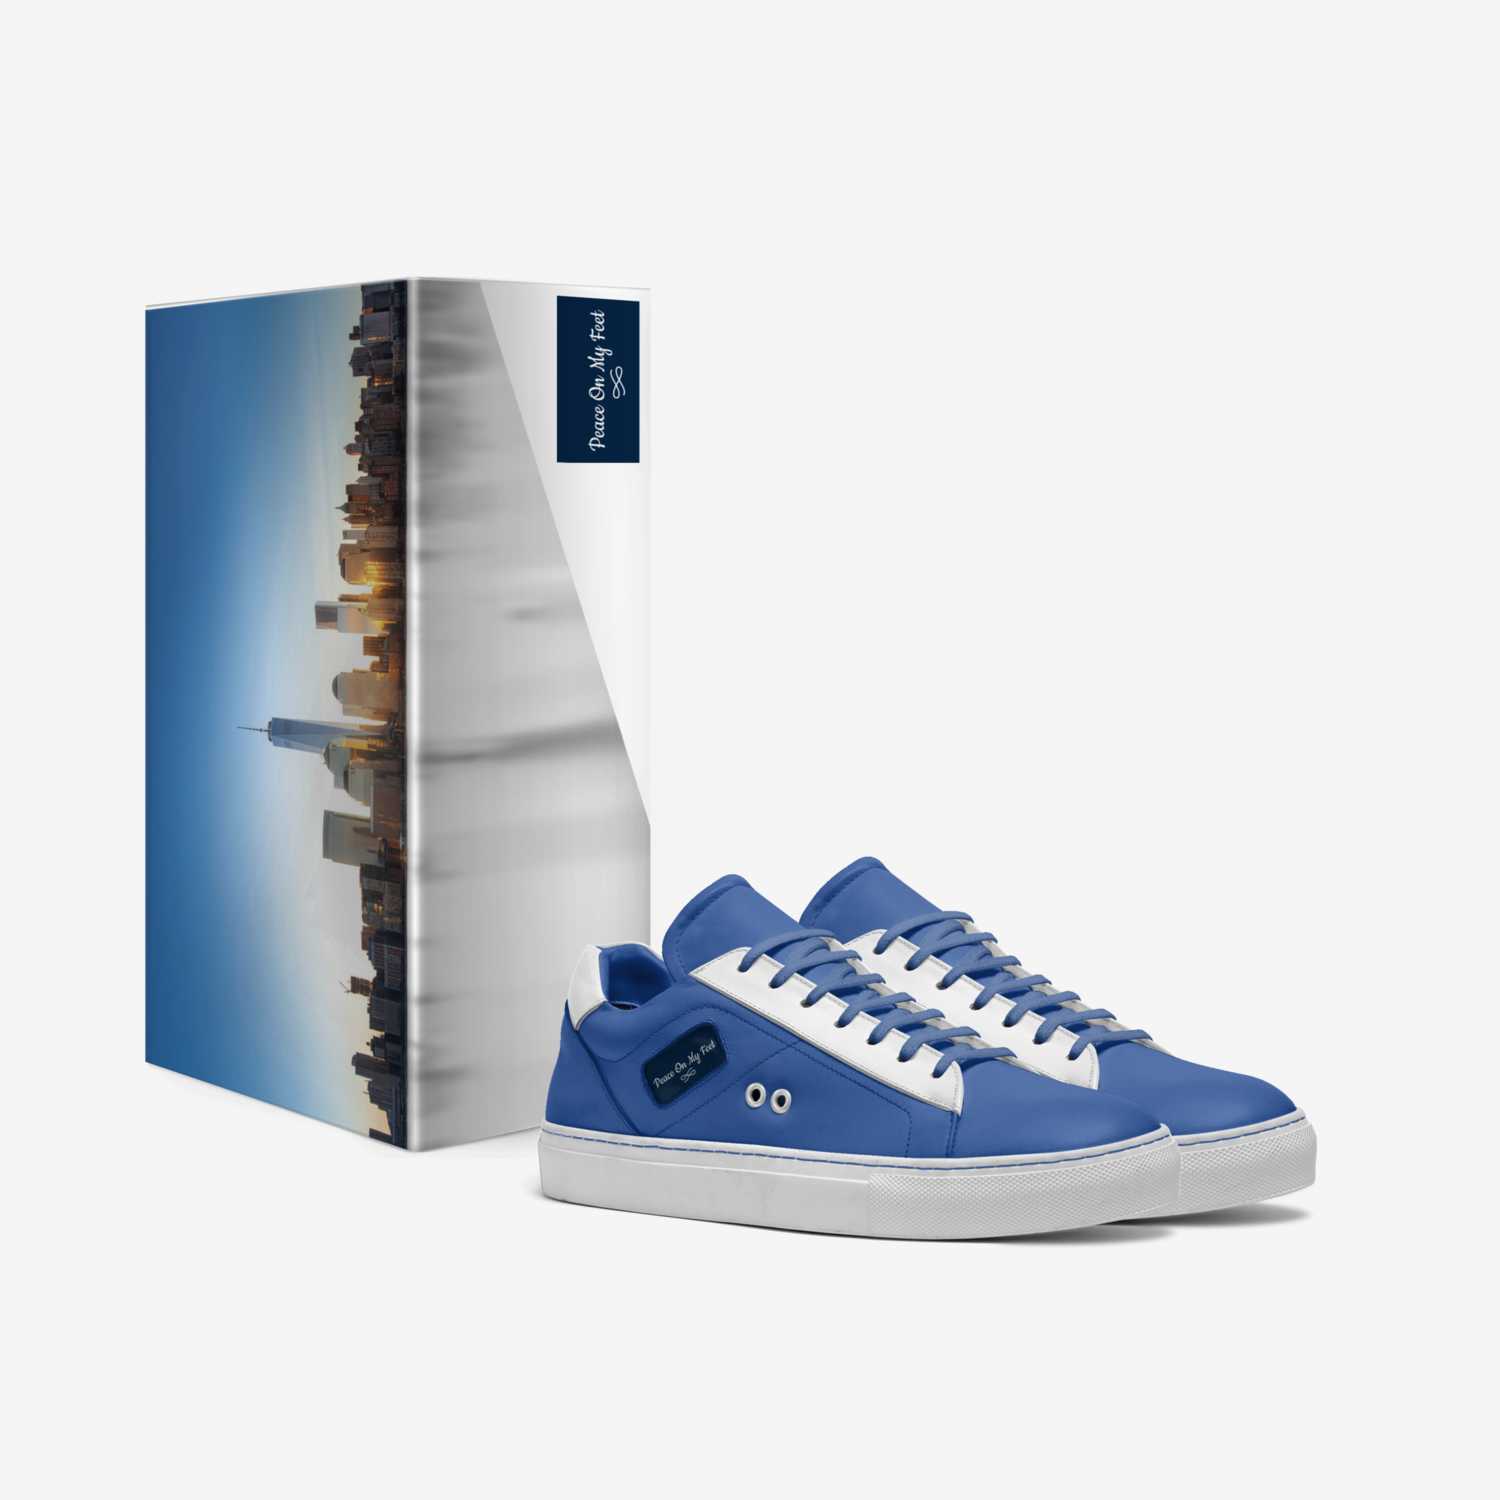 P Sanders custom made in Italy shoes by Tammi Sanders | Box view